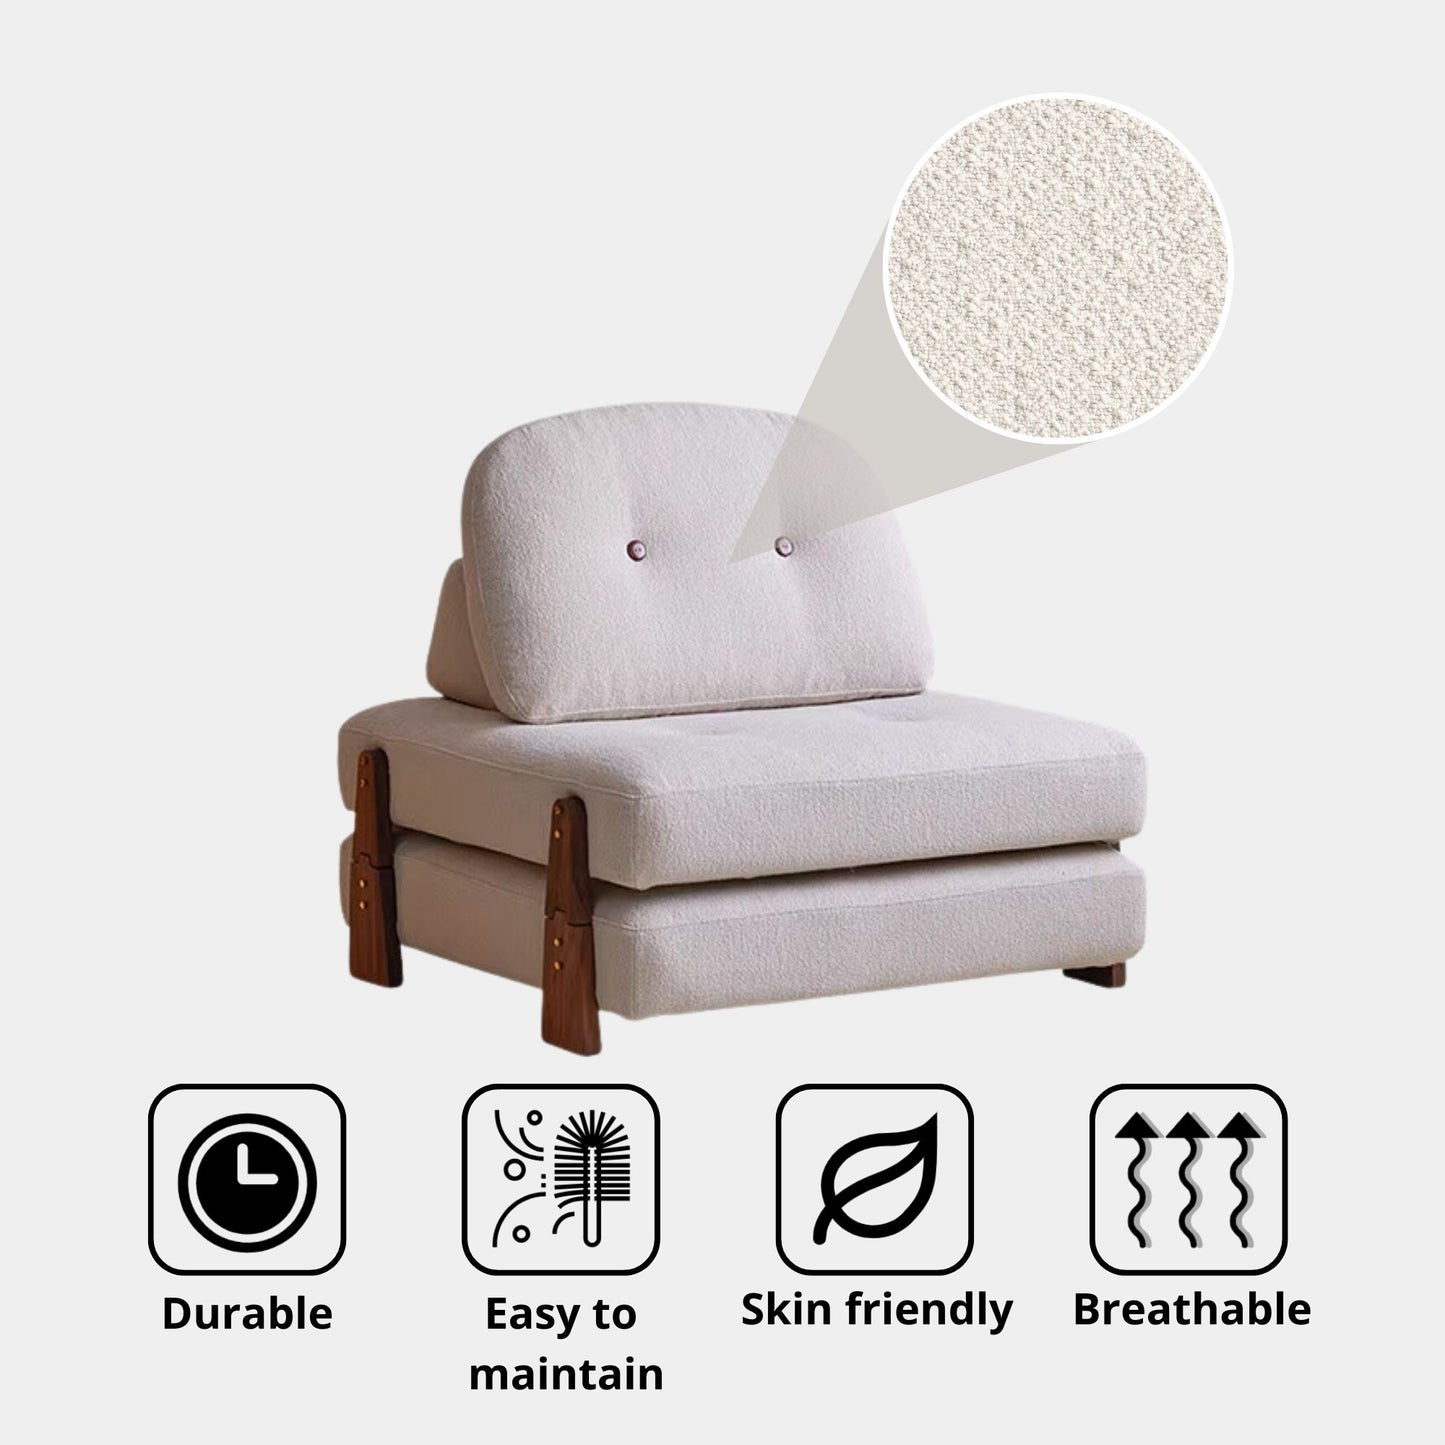 Cakelet fabric sofa bed white